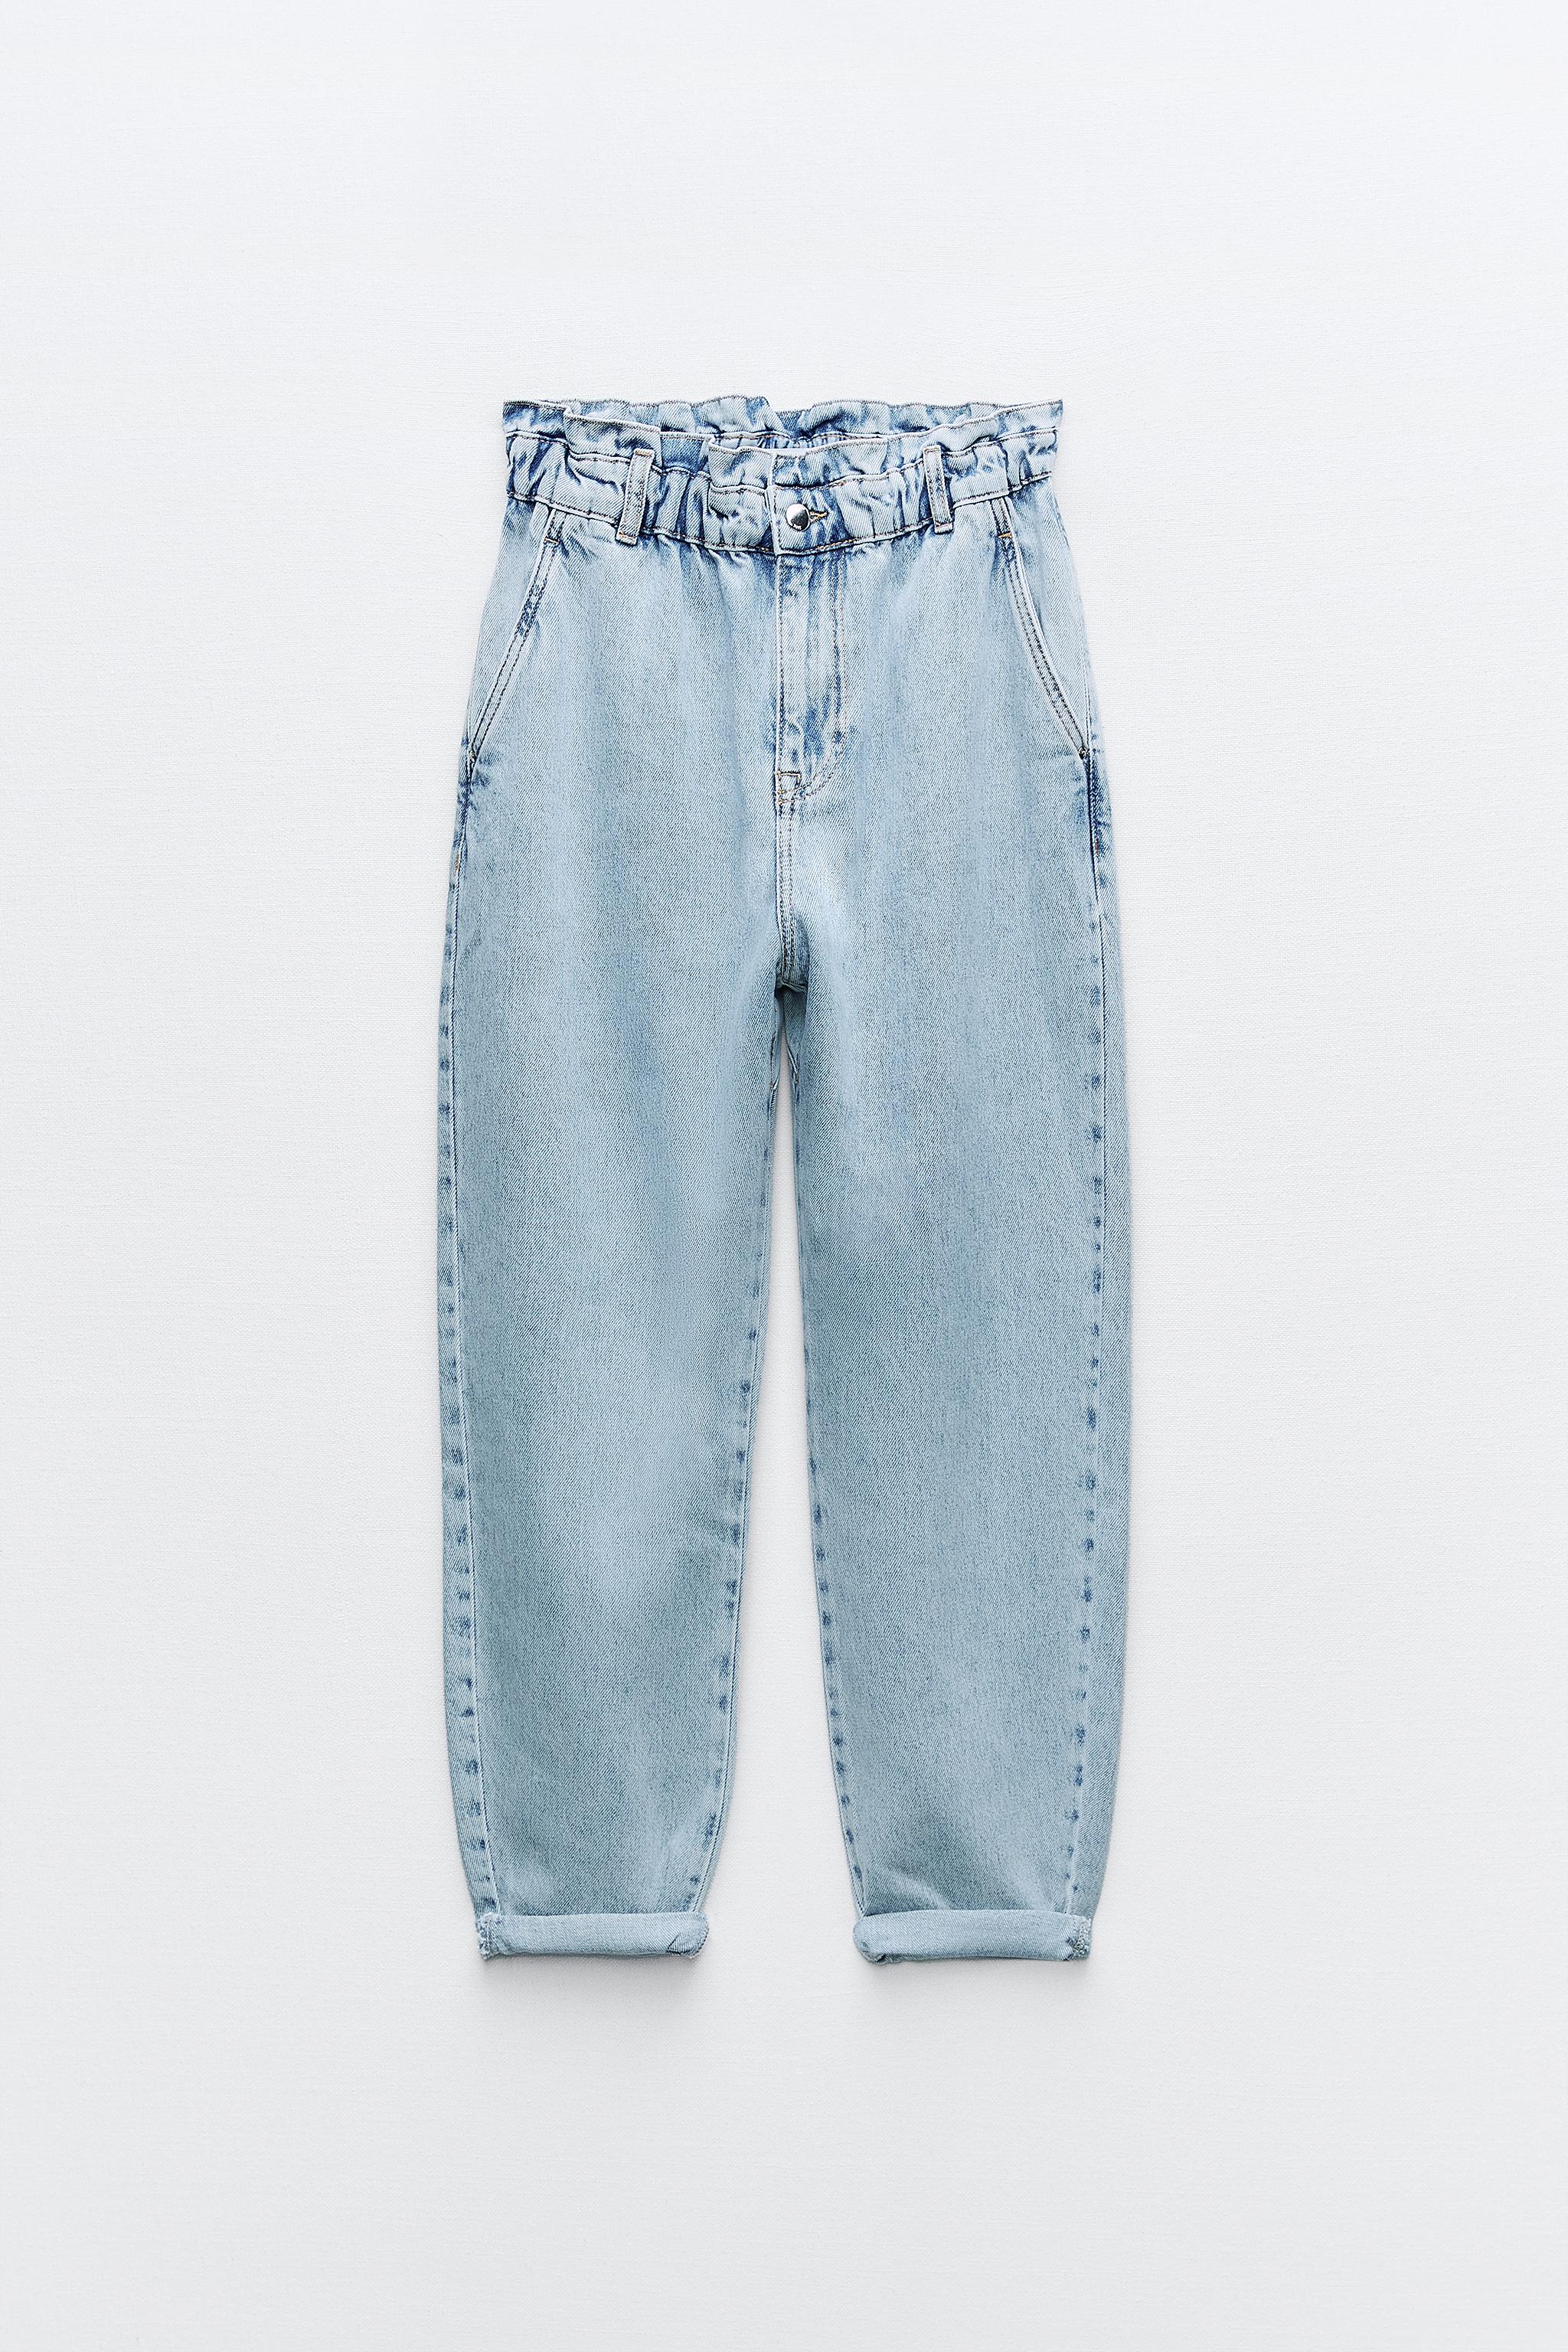 Women's Baggy Jeans, Explore our New Arrivals